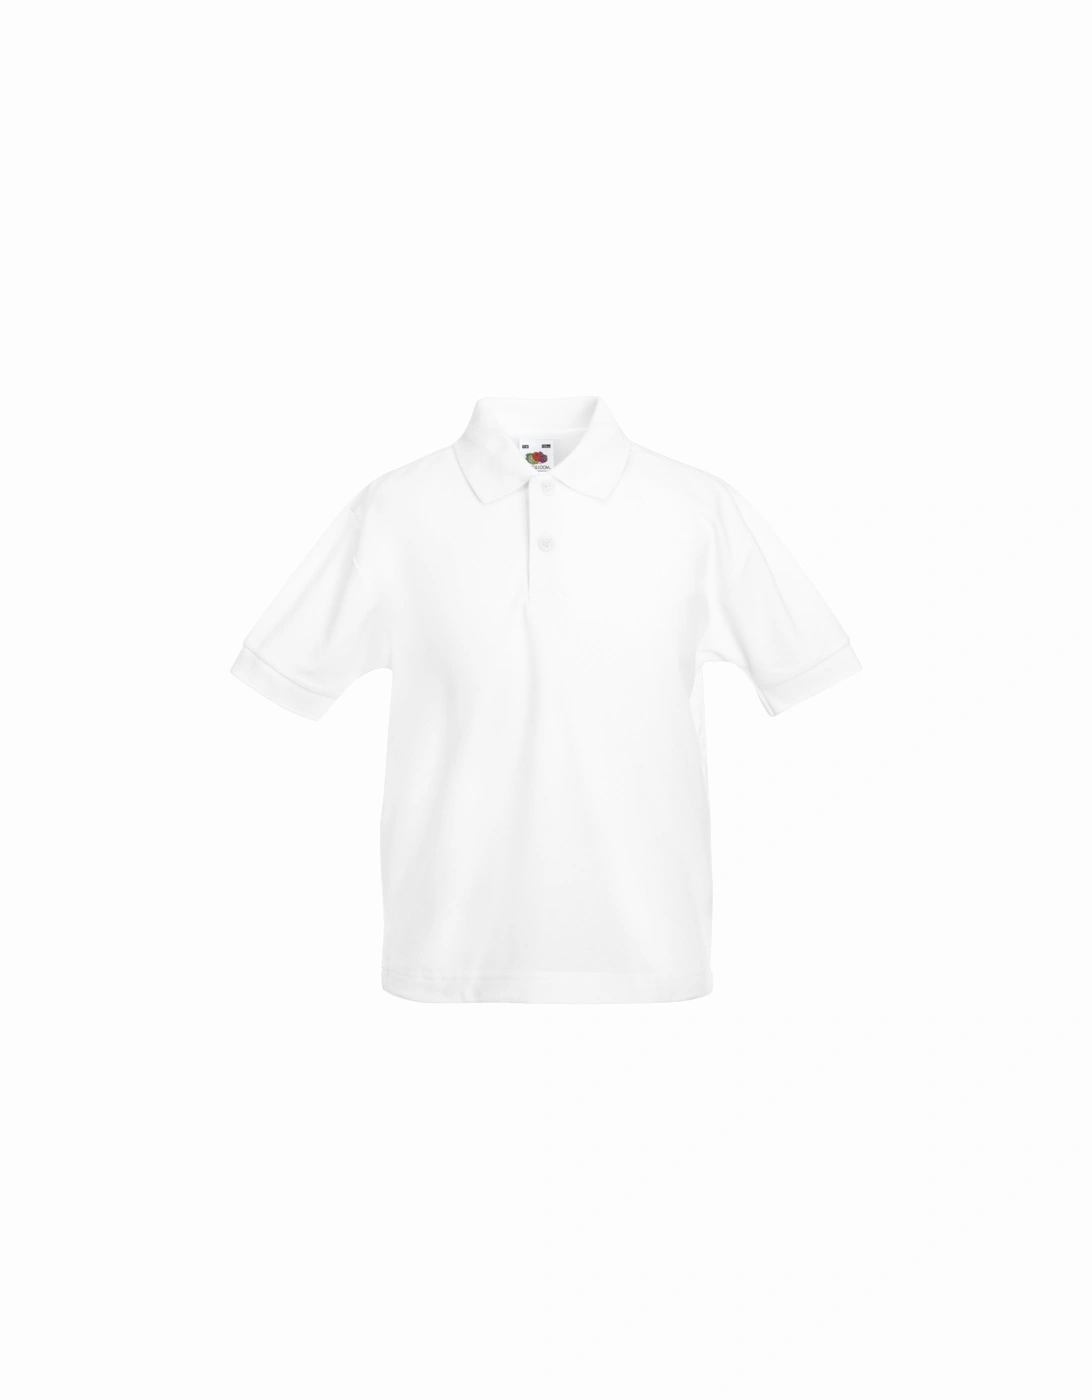 Childrens/Kids Unisex 65/35 Pique Polo Shirt, 4 of 3